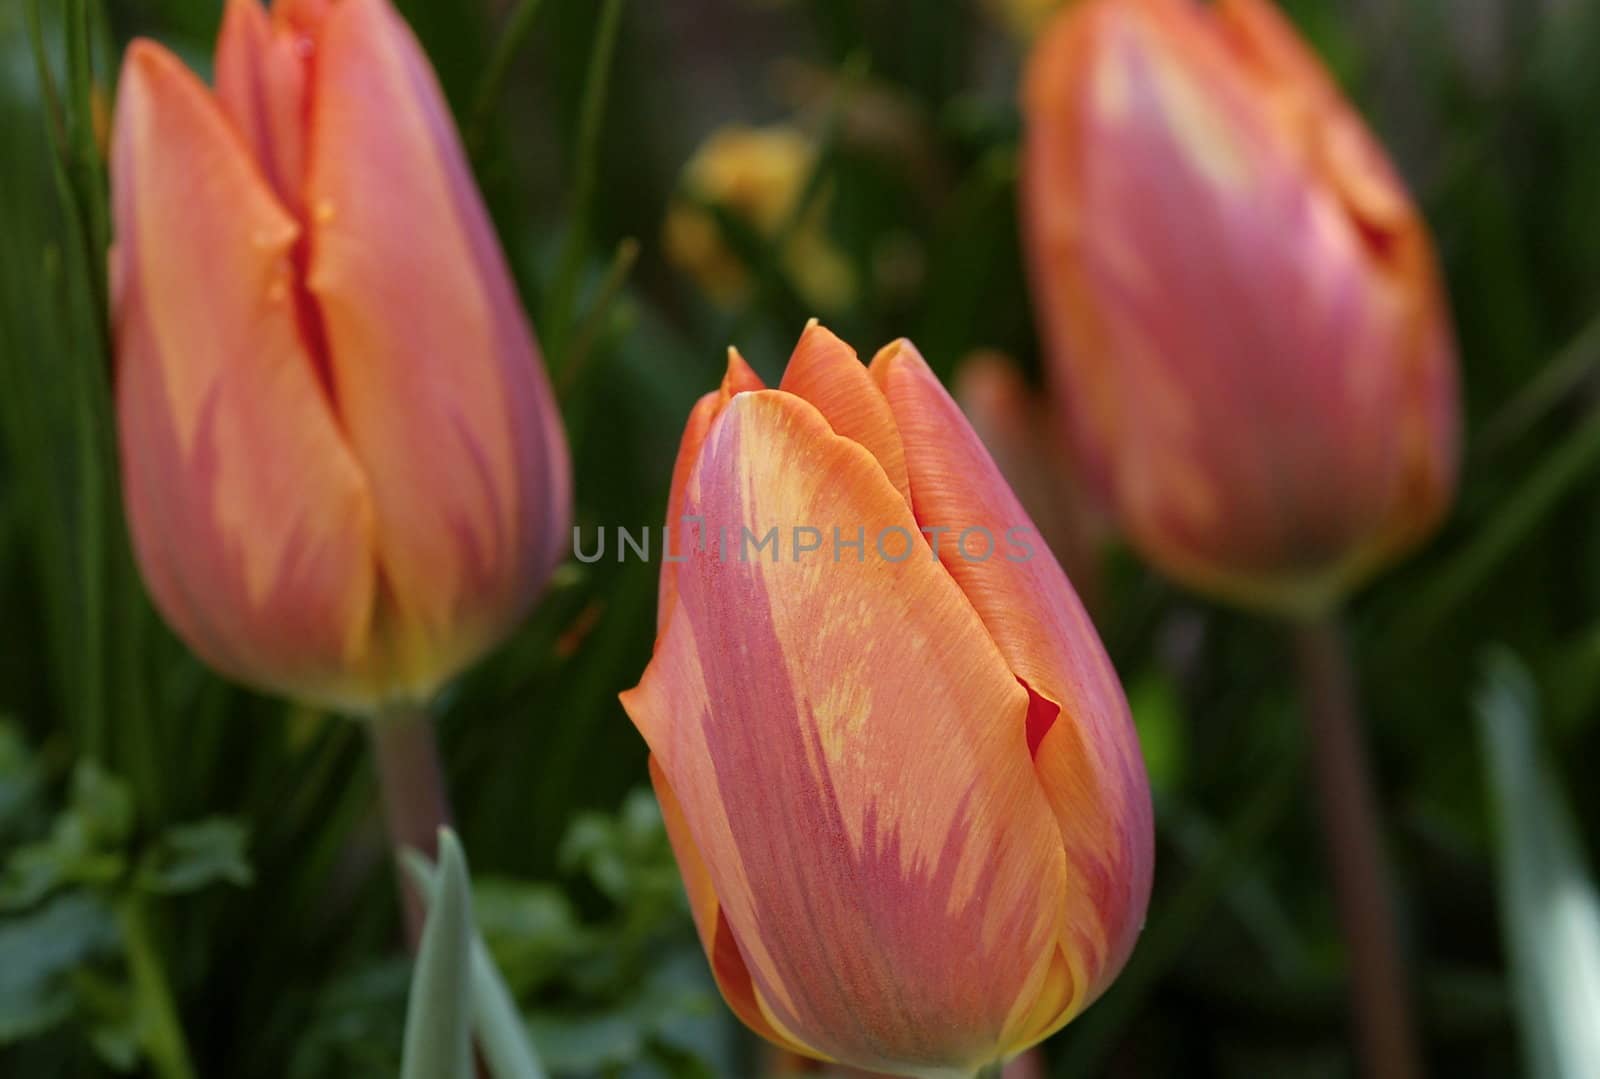 Dancing Tulips by PrincessToula